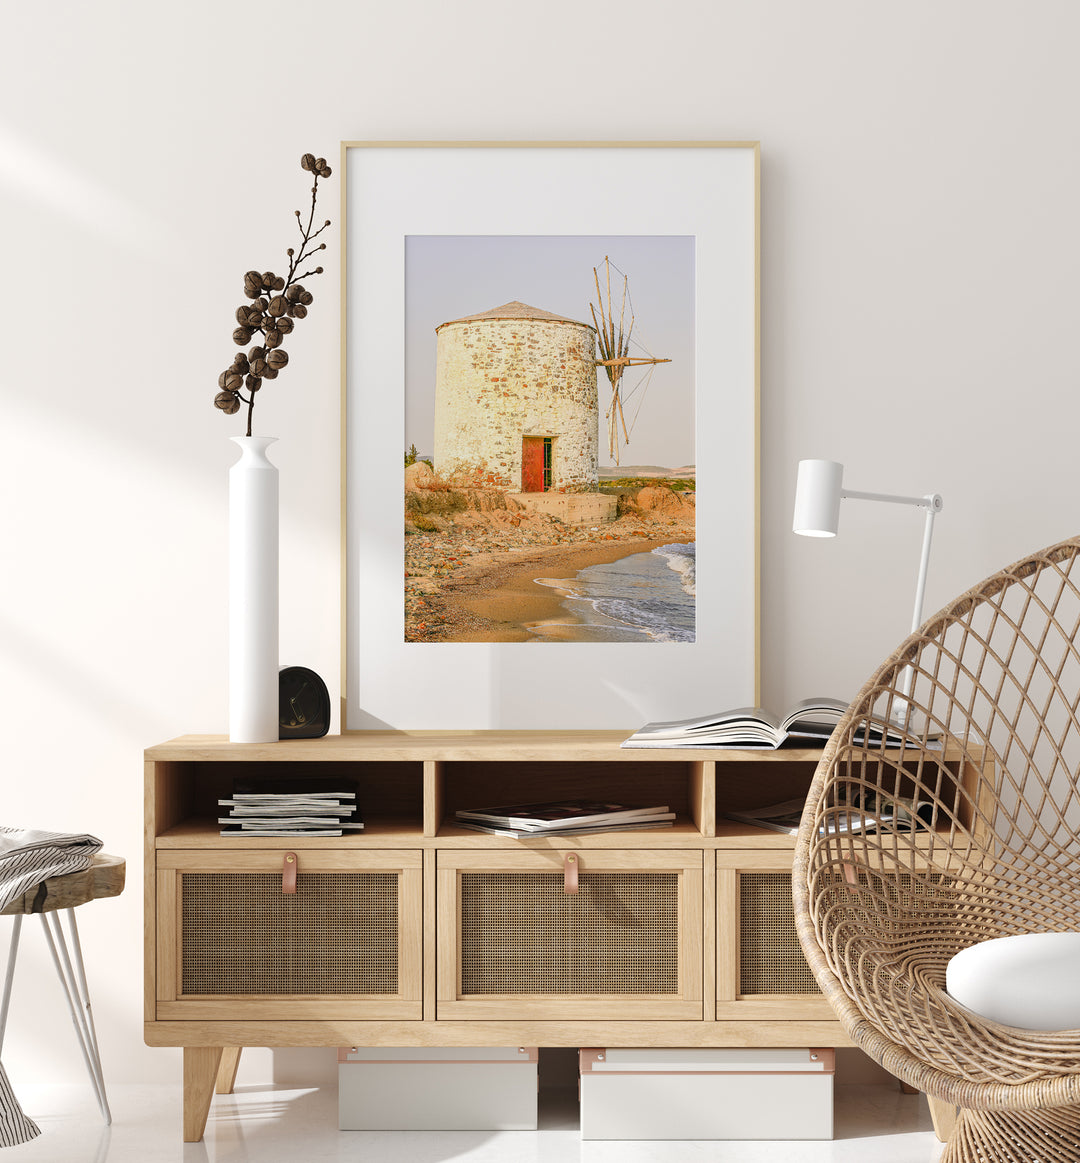 Greek Windmill | Fine Art Photography Print